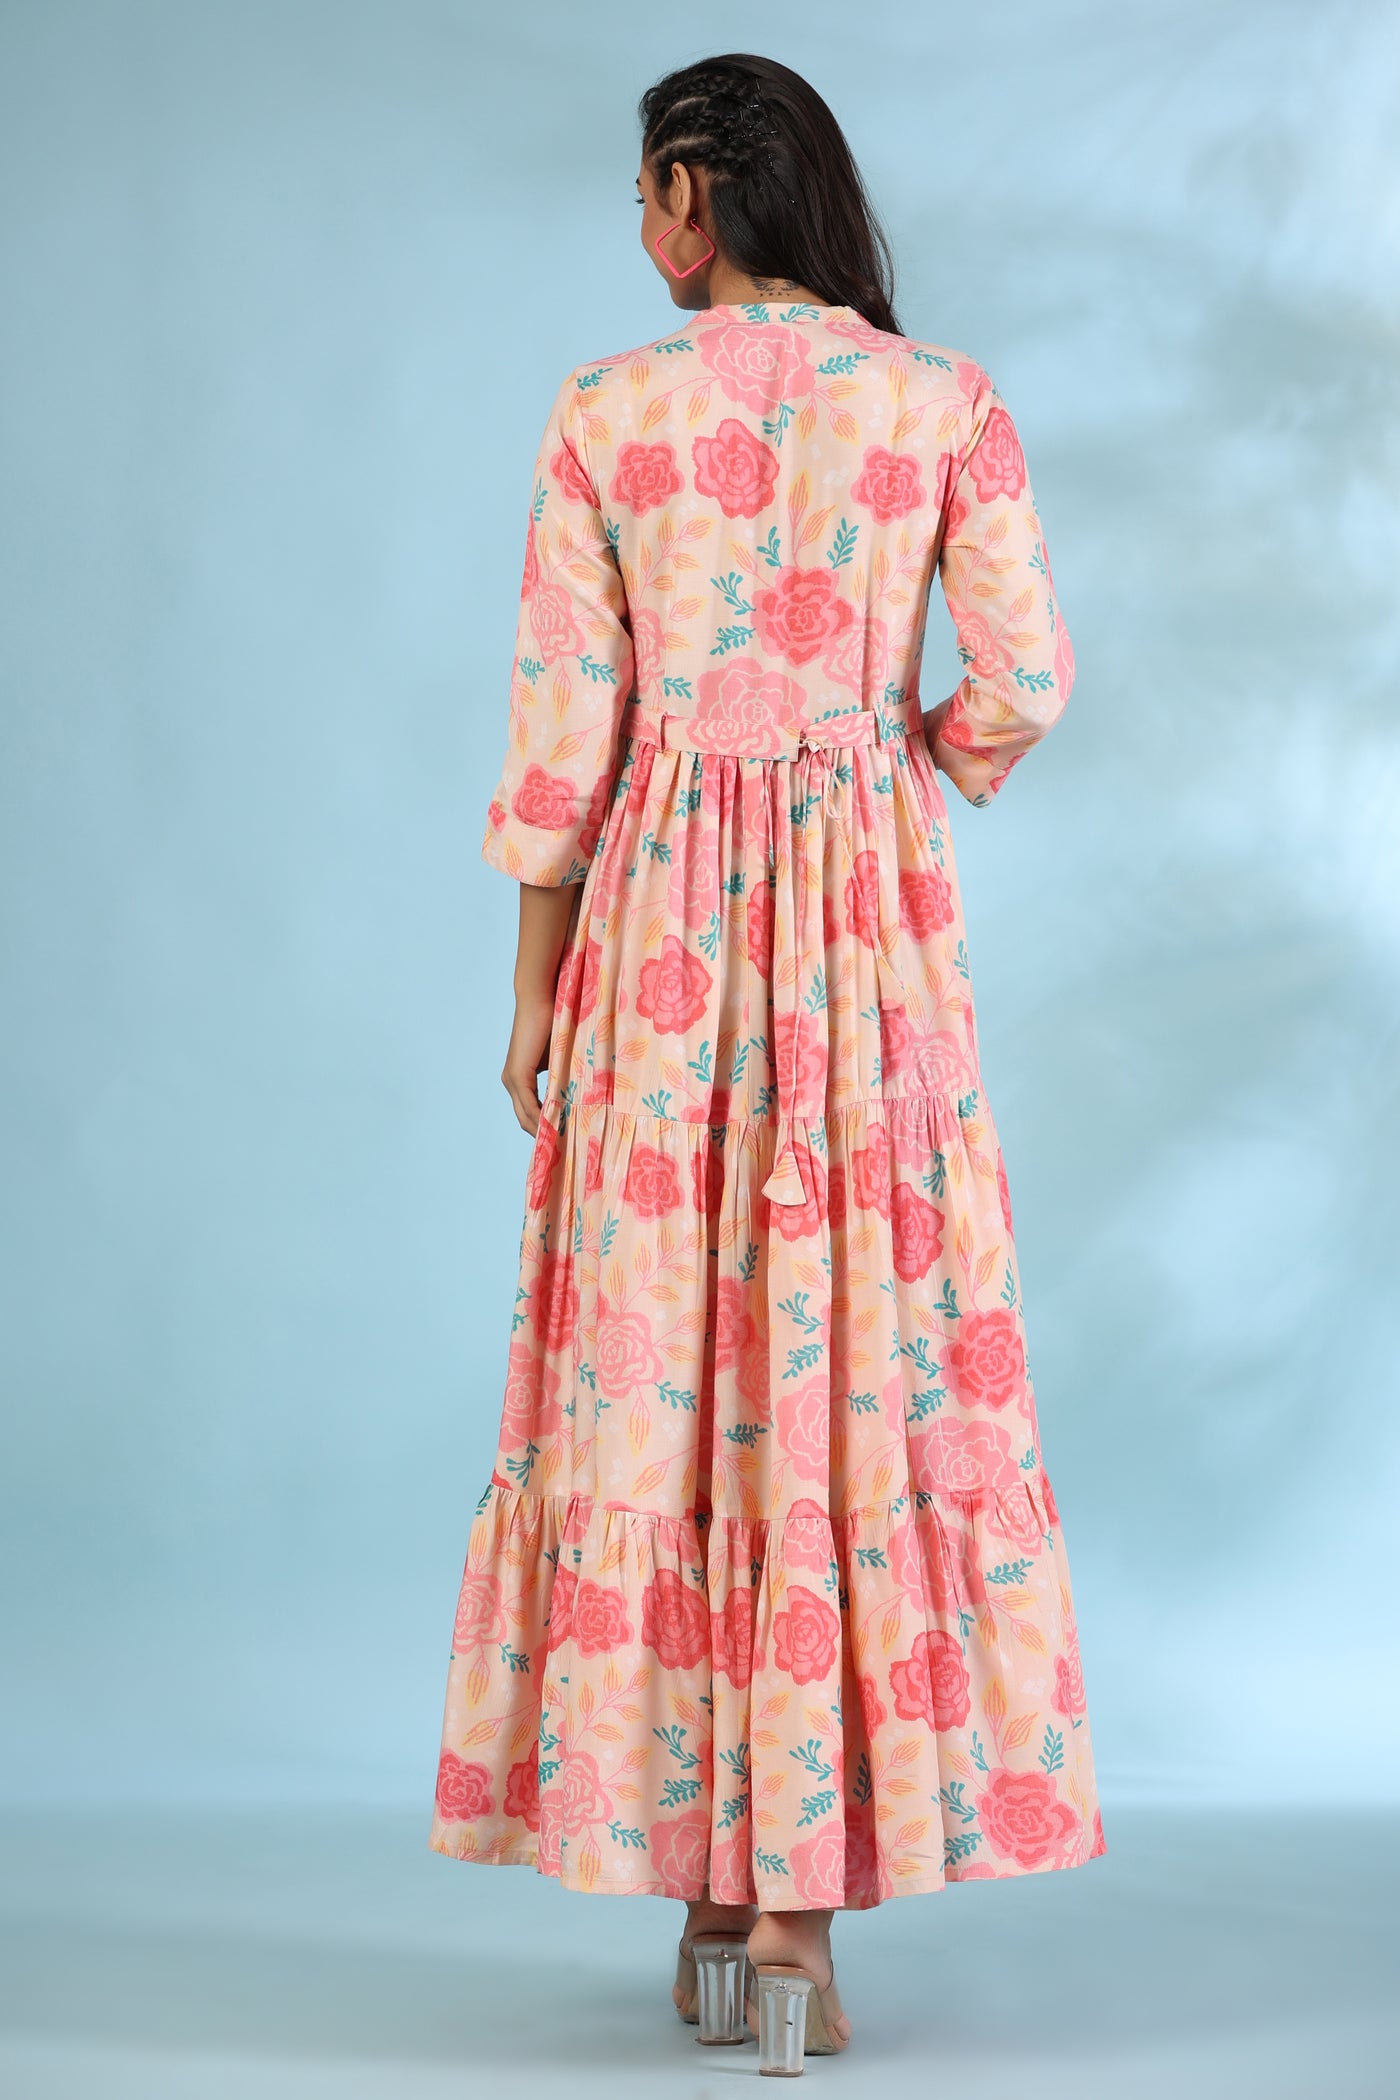 Bloomed Roses On Peach Silk Maxi Dress